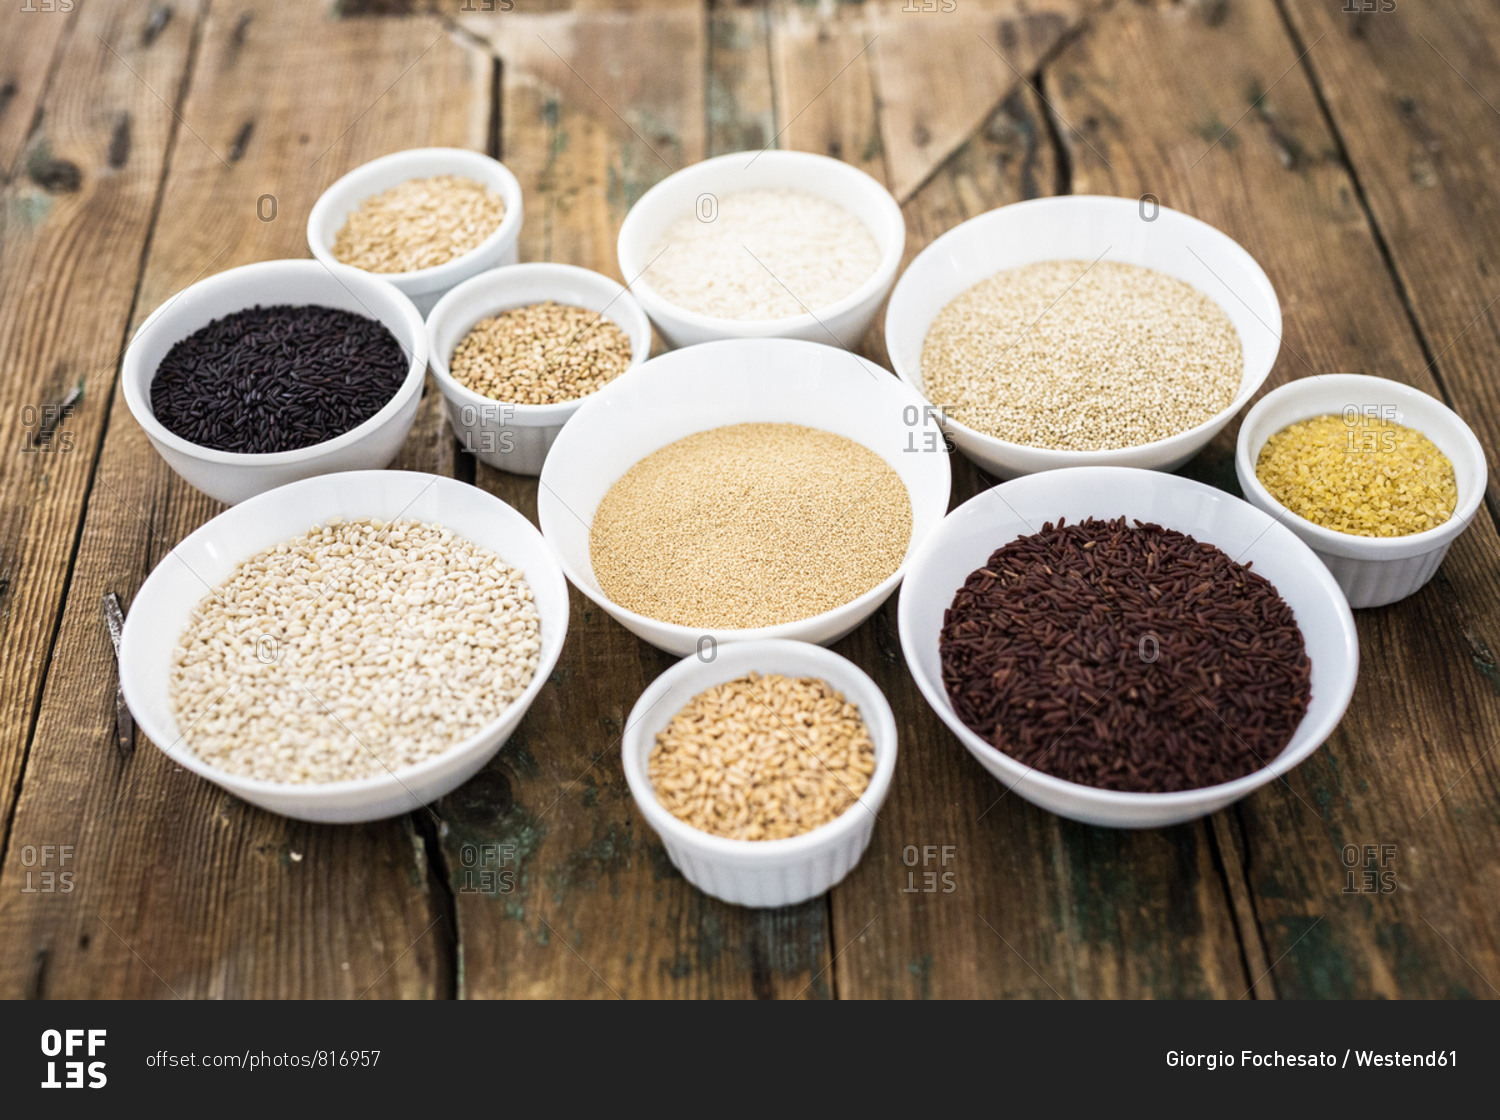 Cereal mix: black rice- red rice- barley- amaranth- quinoa- rice- bulgur- oats and buckwheat